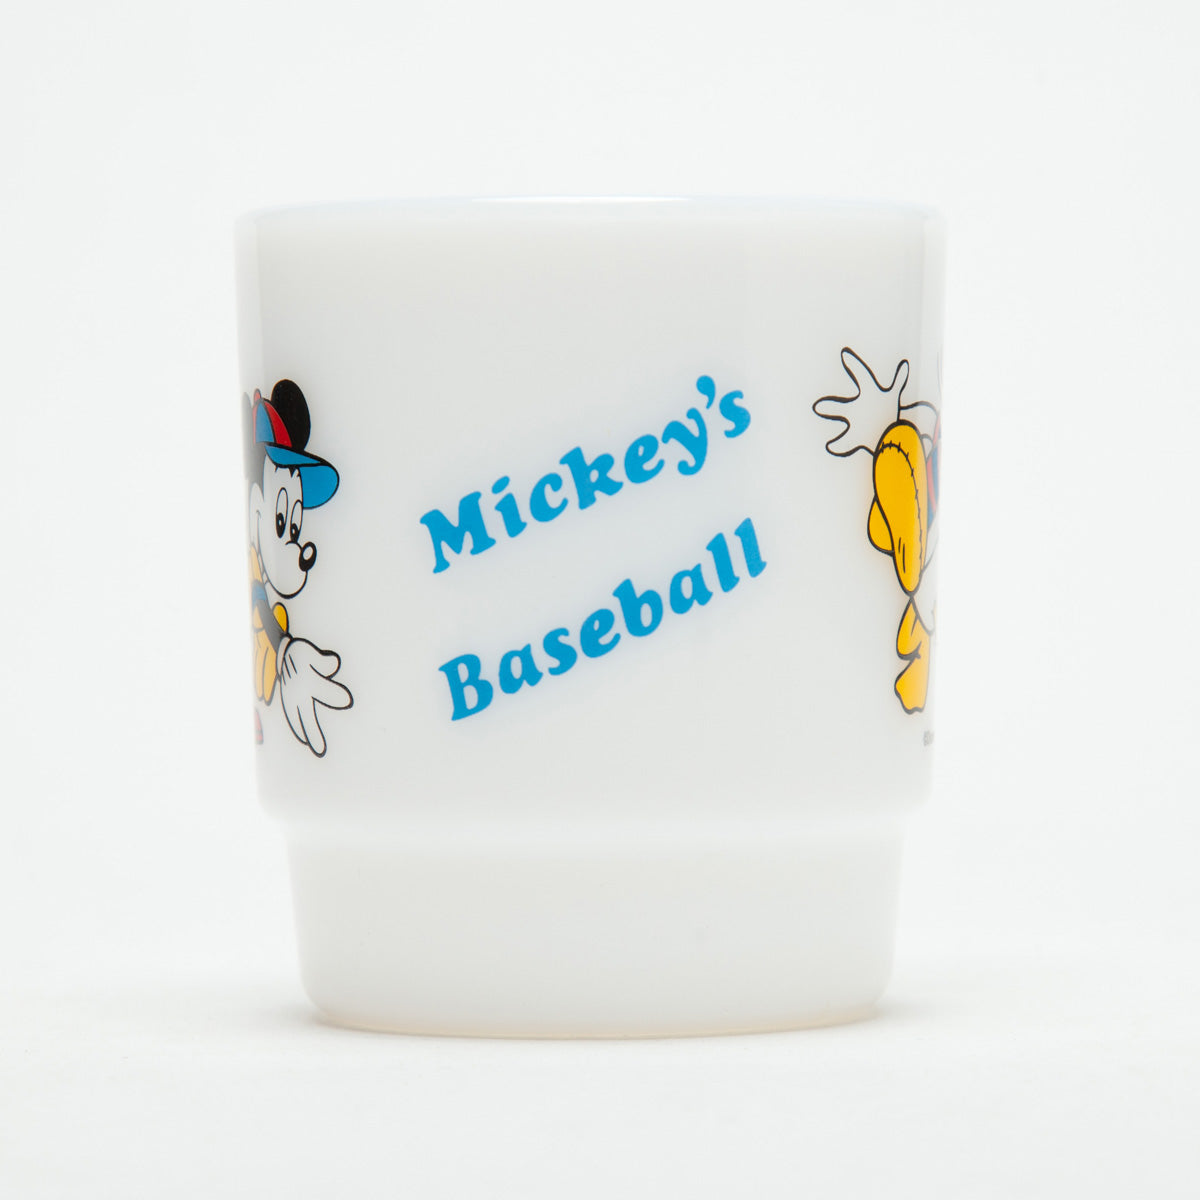 Fire-King スタッキングマグ Disney [Mickey's Baseball]